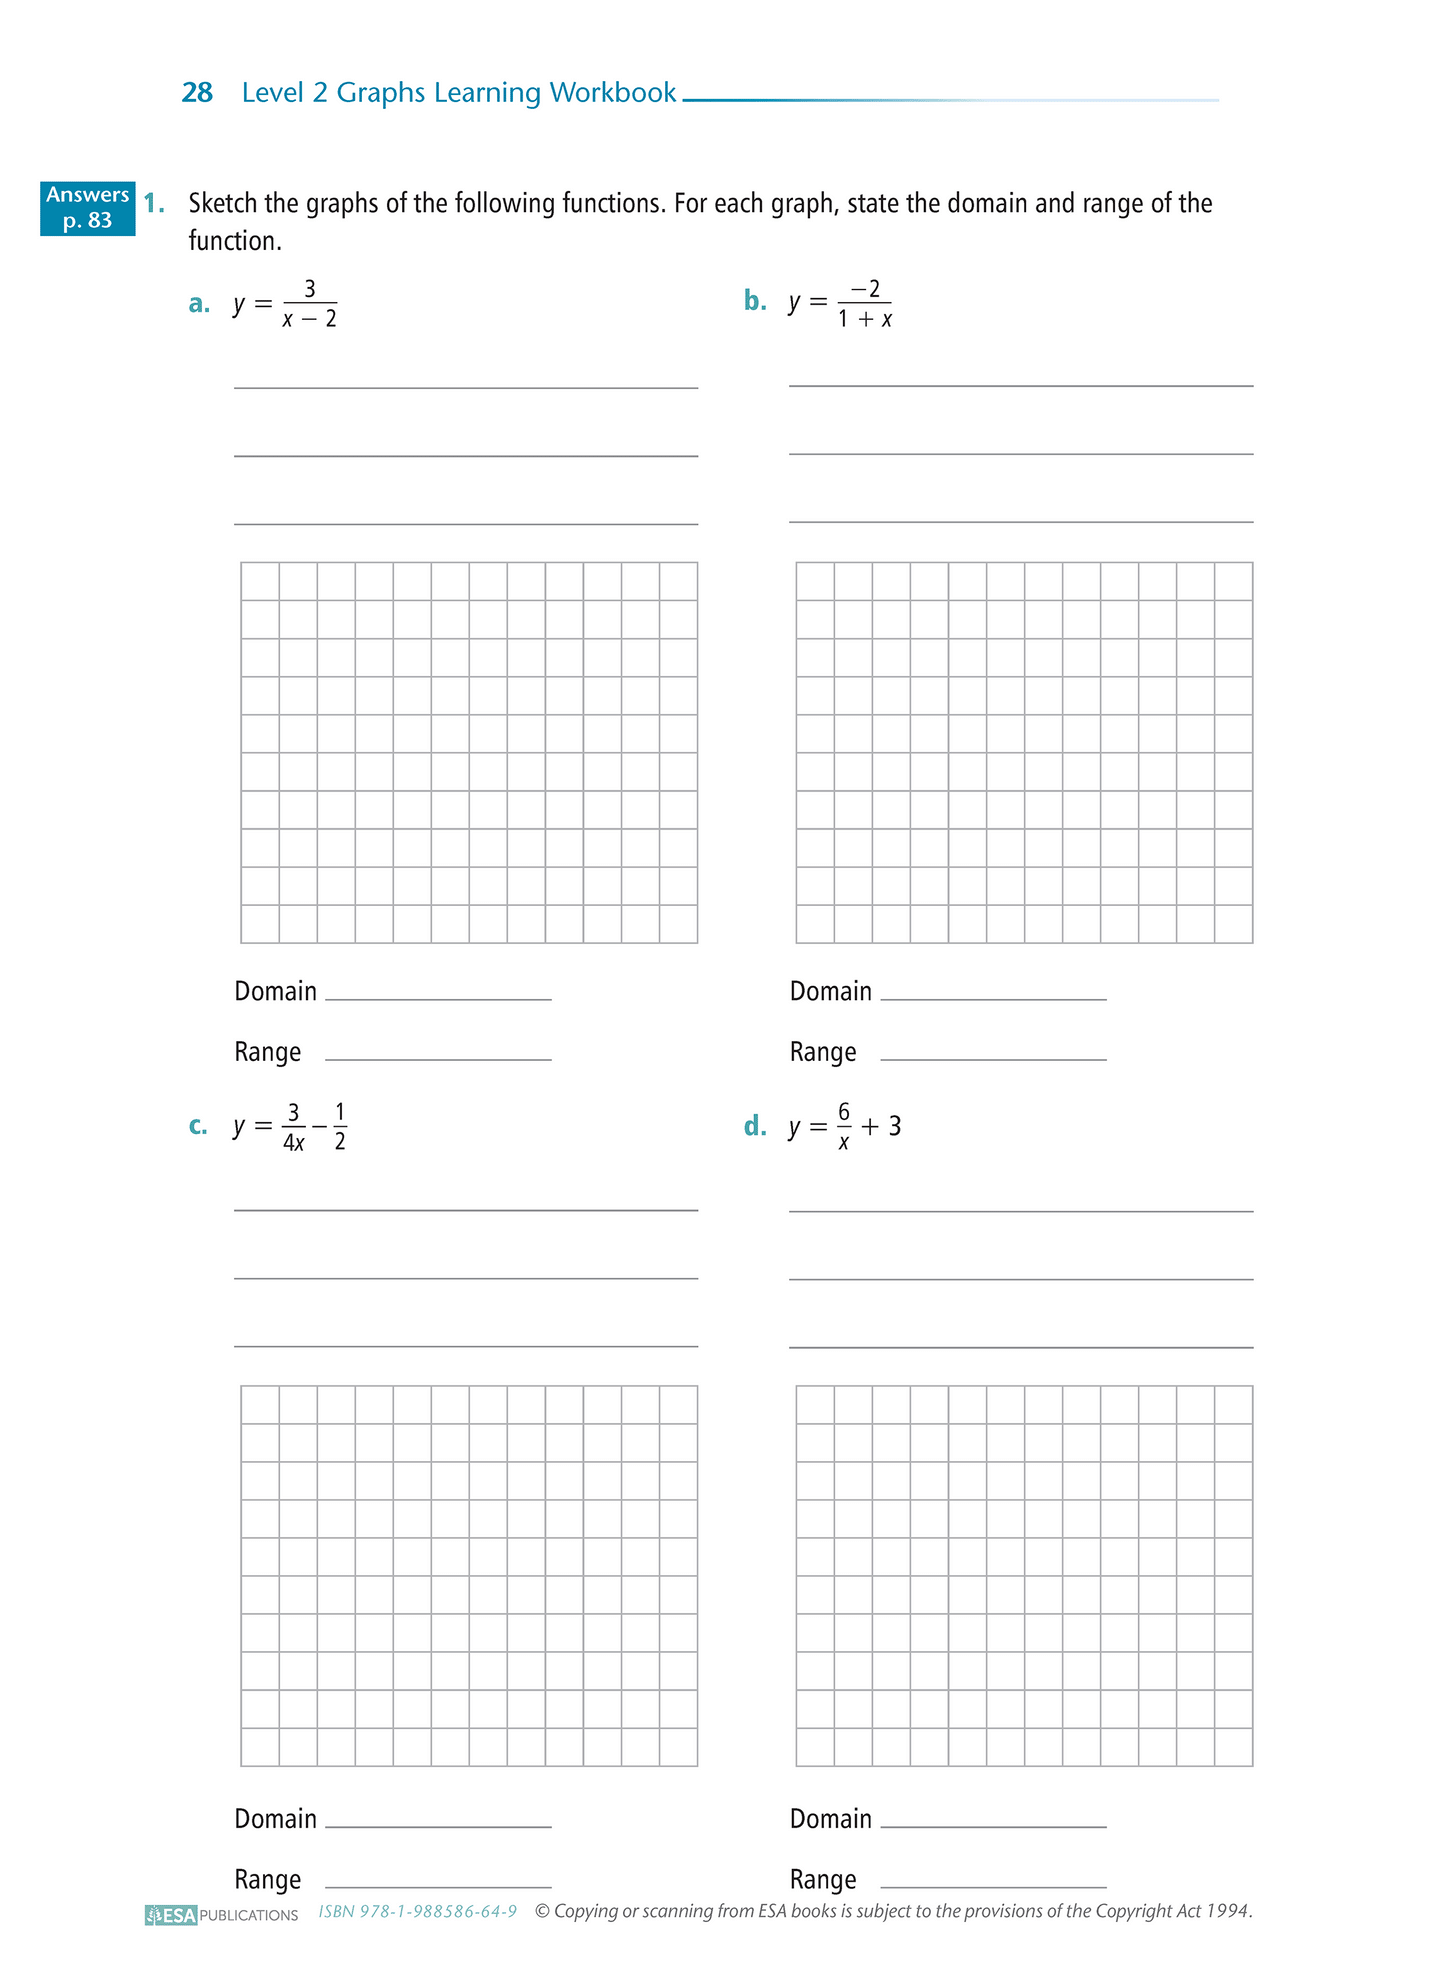 Level 2 Graphs 2.2 Learning Workbook